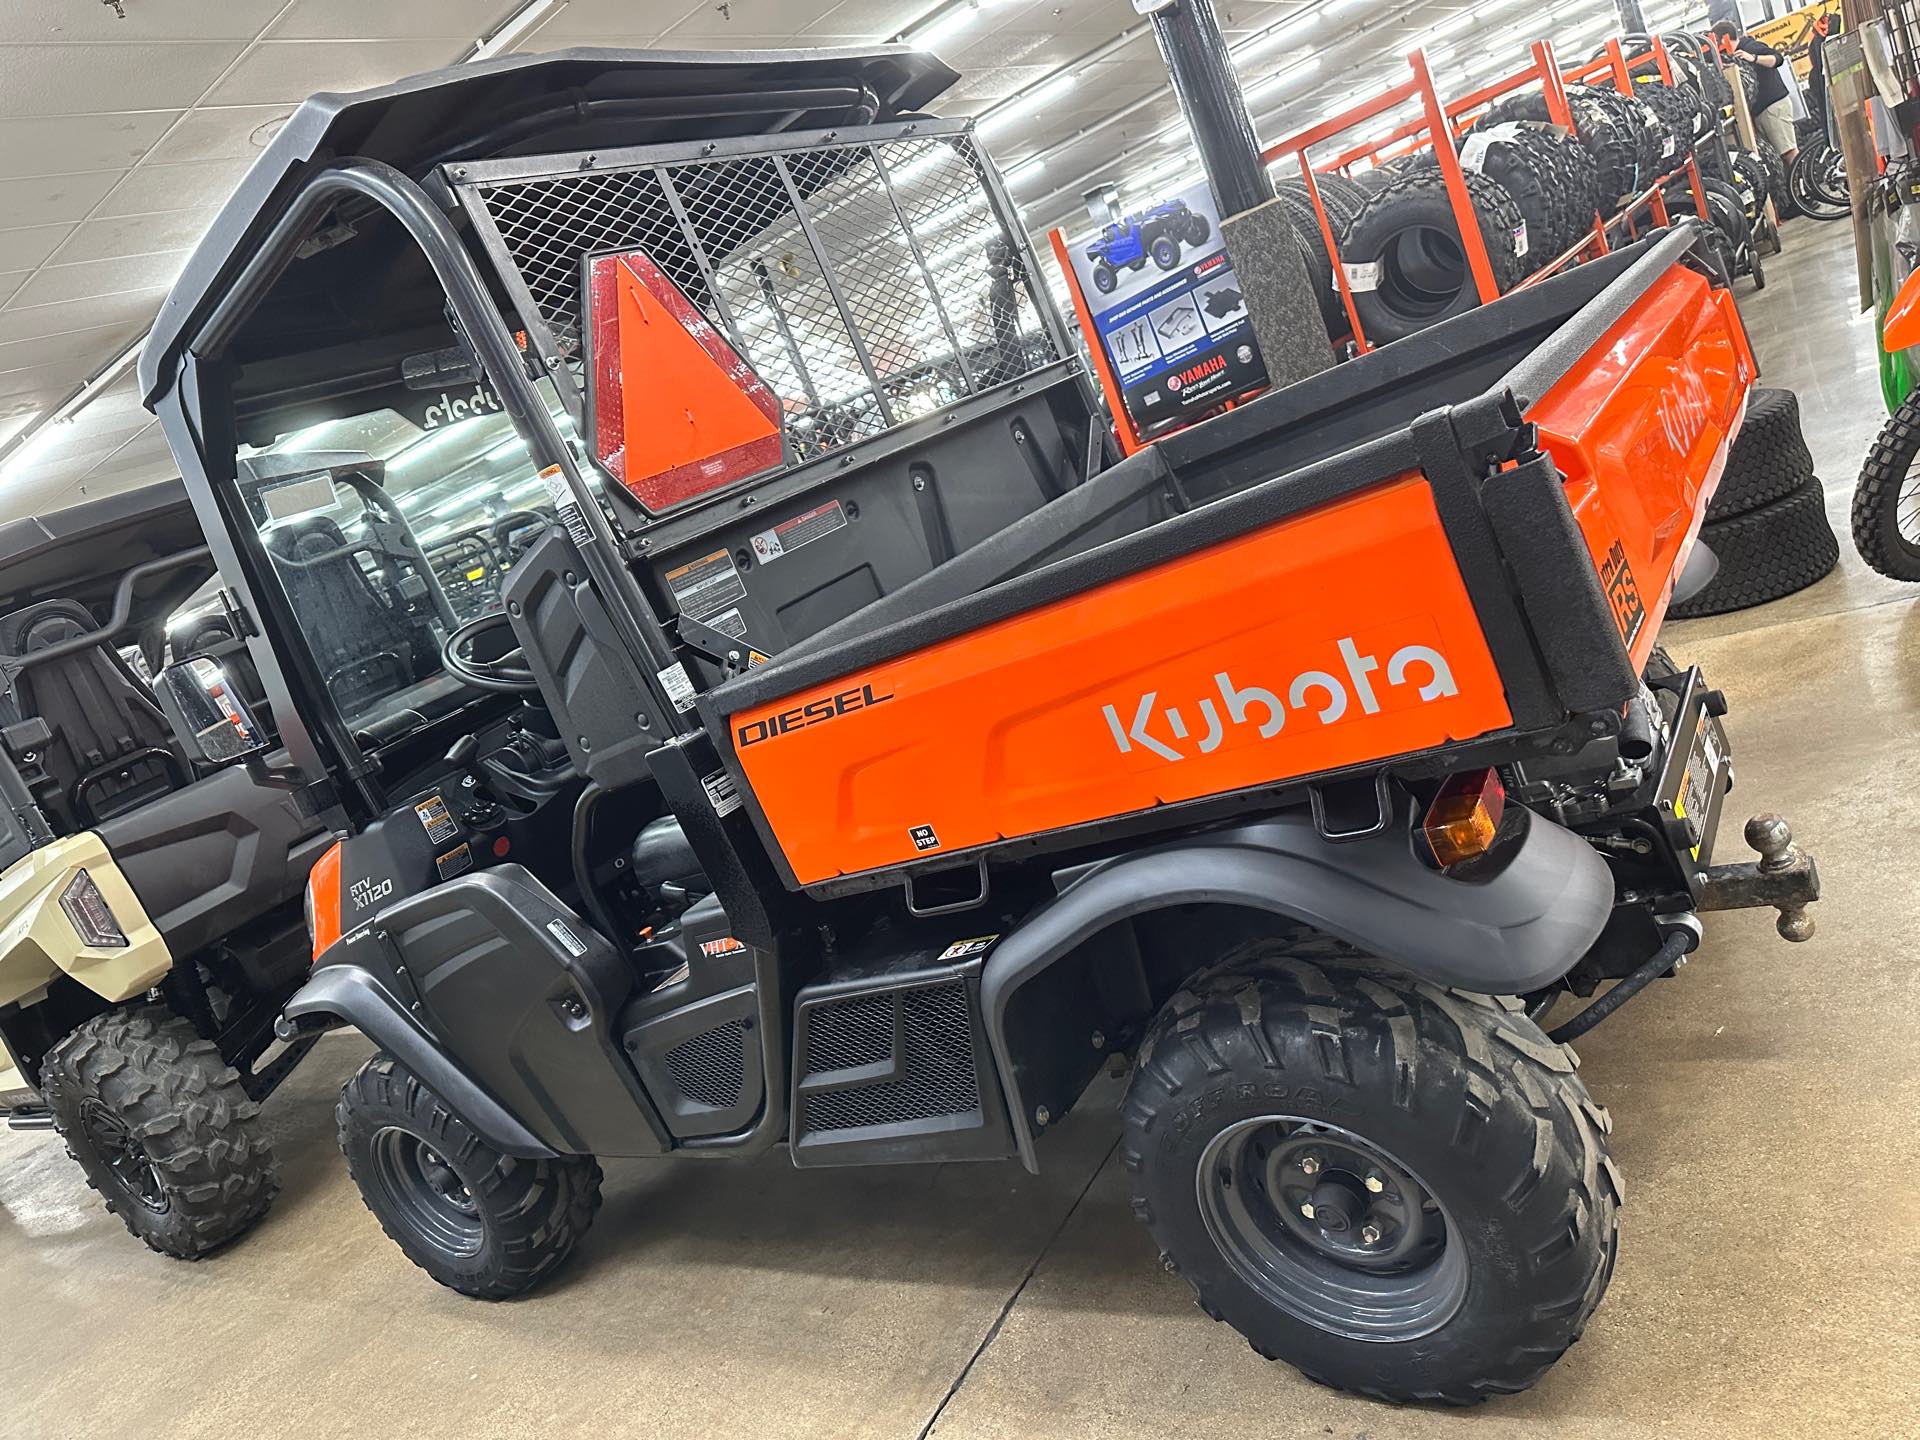 2021 Kubota RTV-X1120WL-A Worksite Orange at ATVs and More